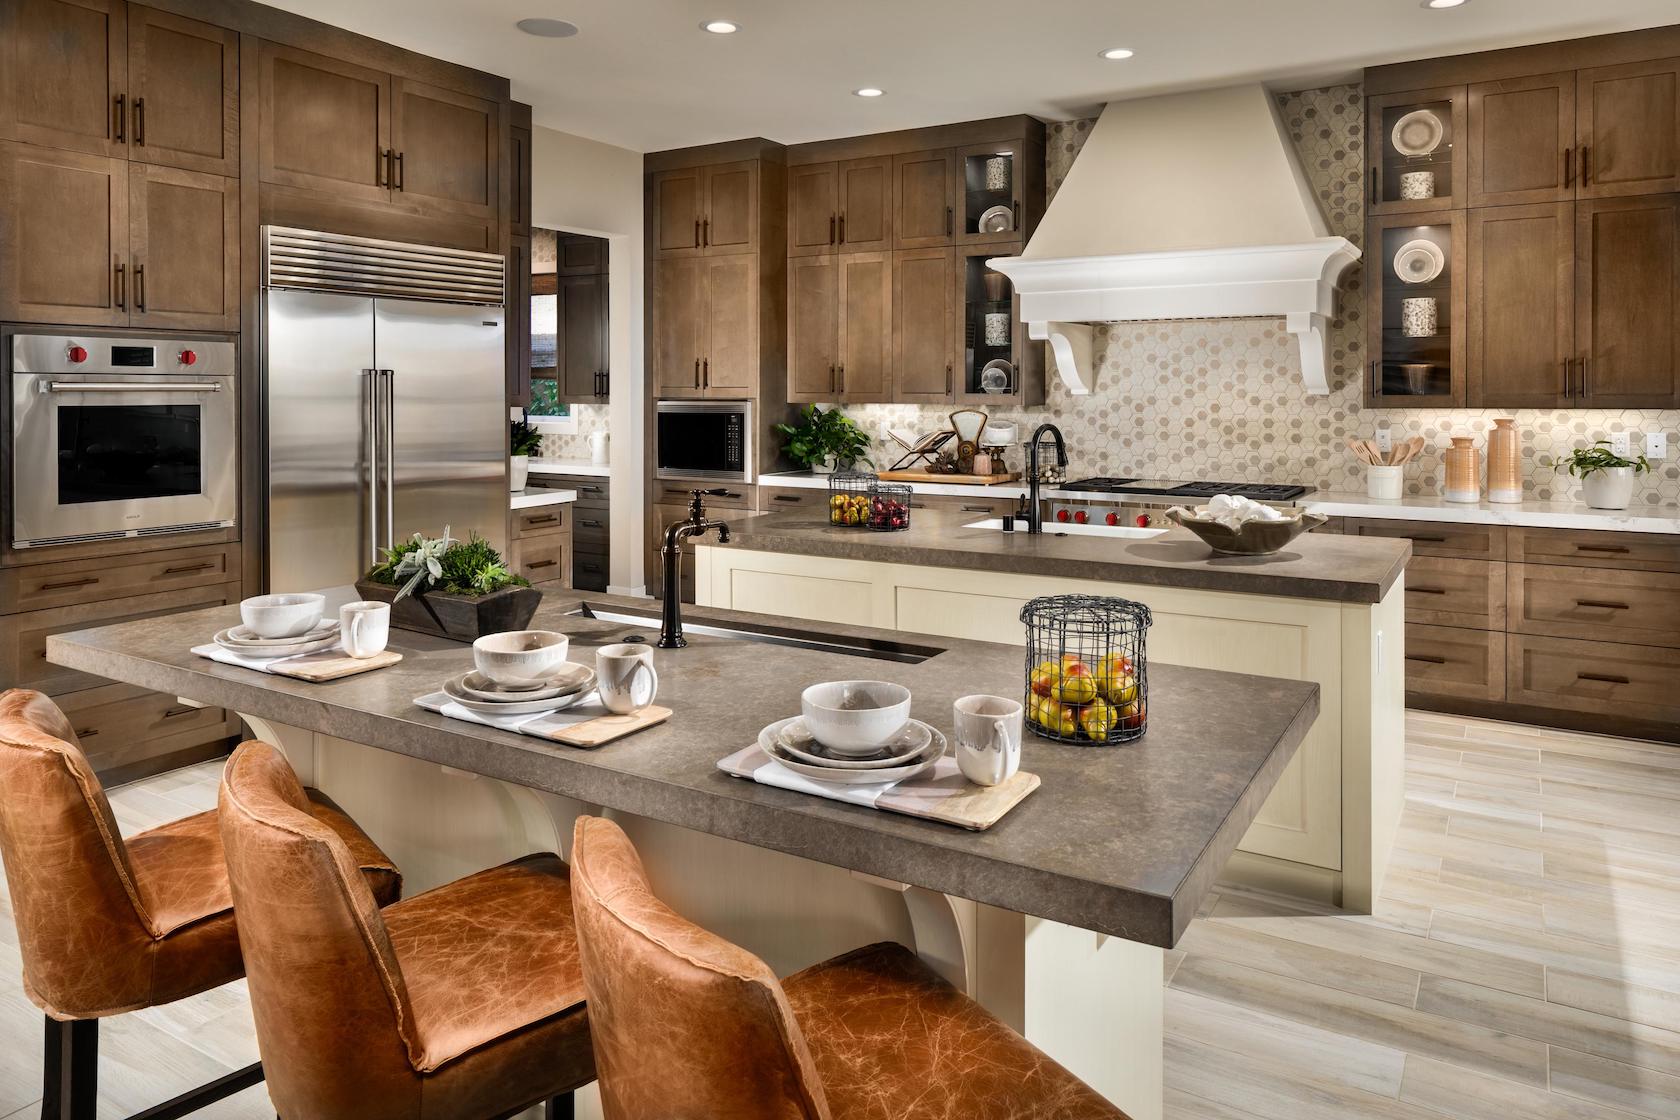 Double kitchen design in California home.